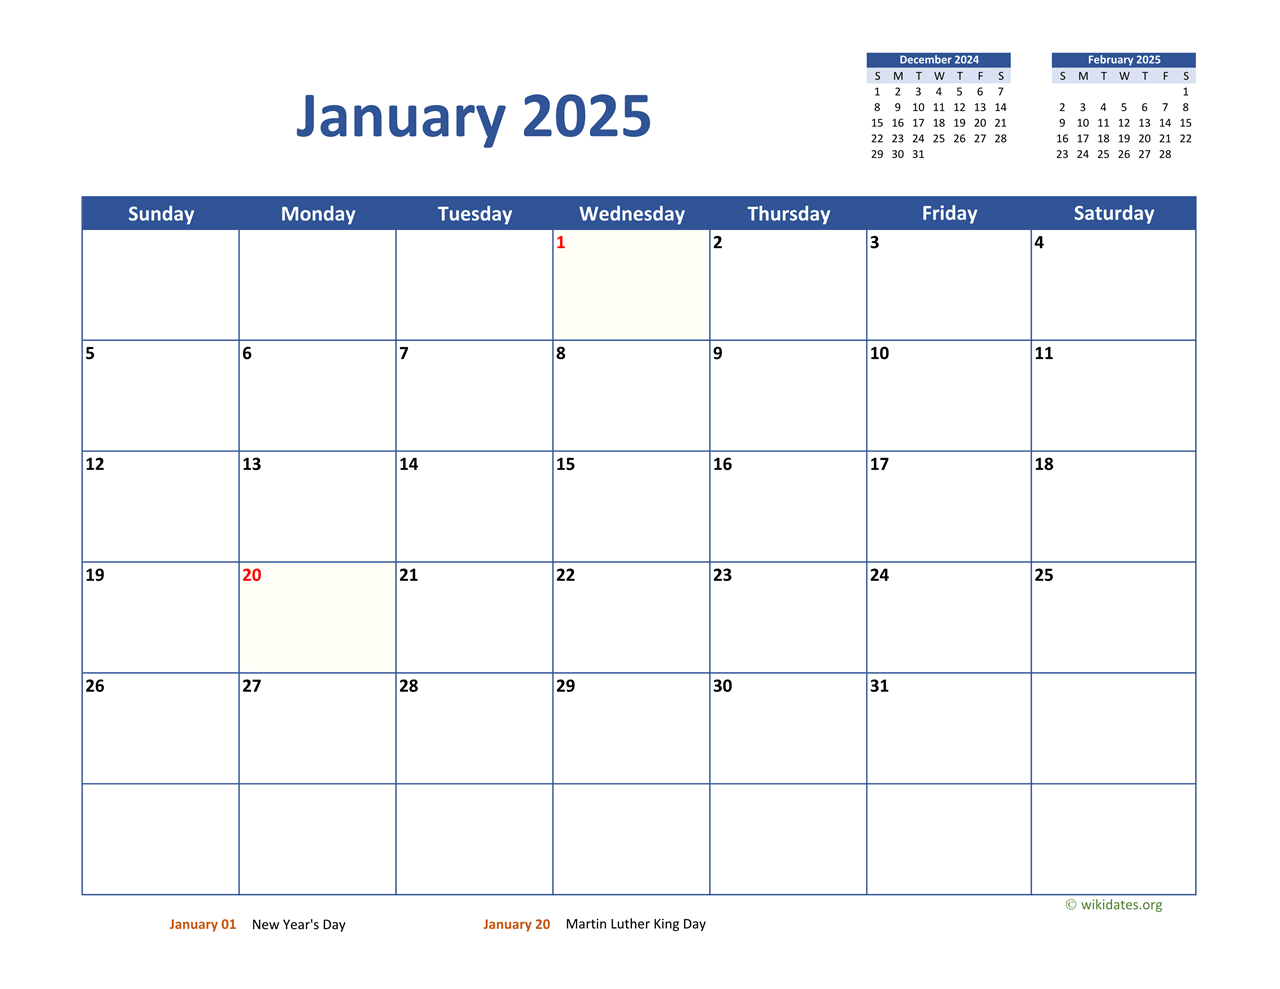 francis-howell-2024-2025-calendar-dareen-maddalena